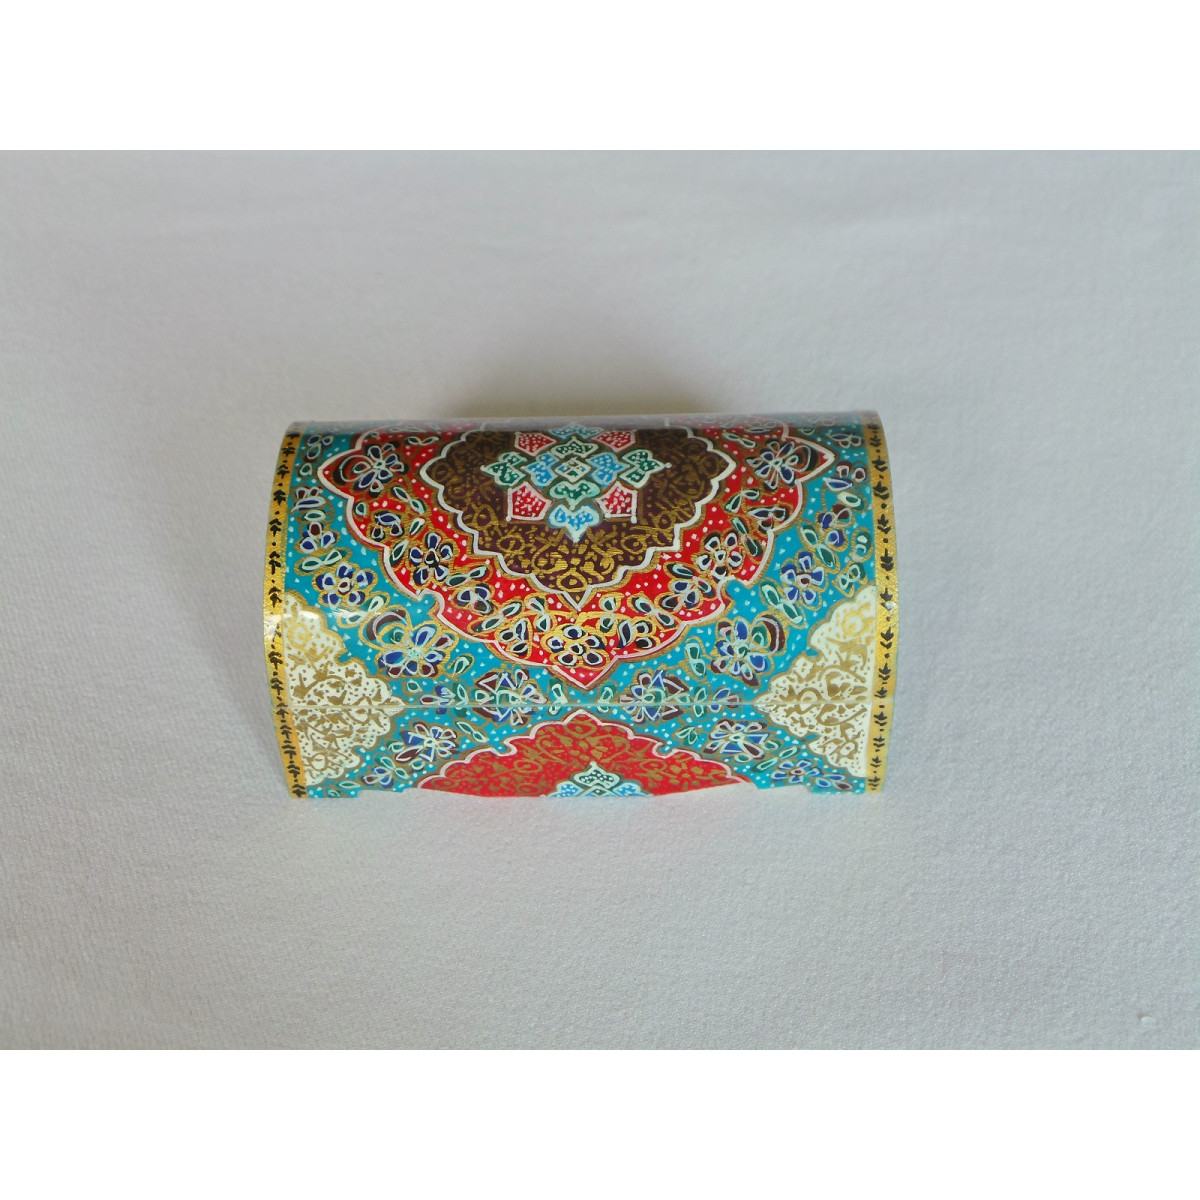 Miniature Hand Painted Jewelry Box - HM1008-Persian Handicrafts